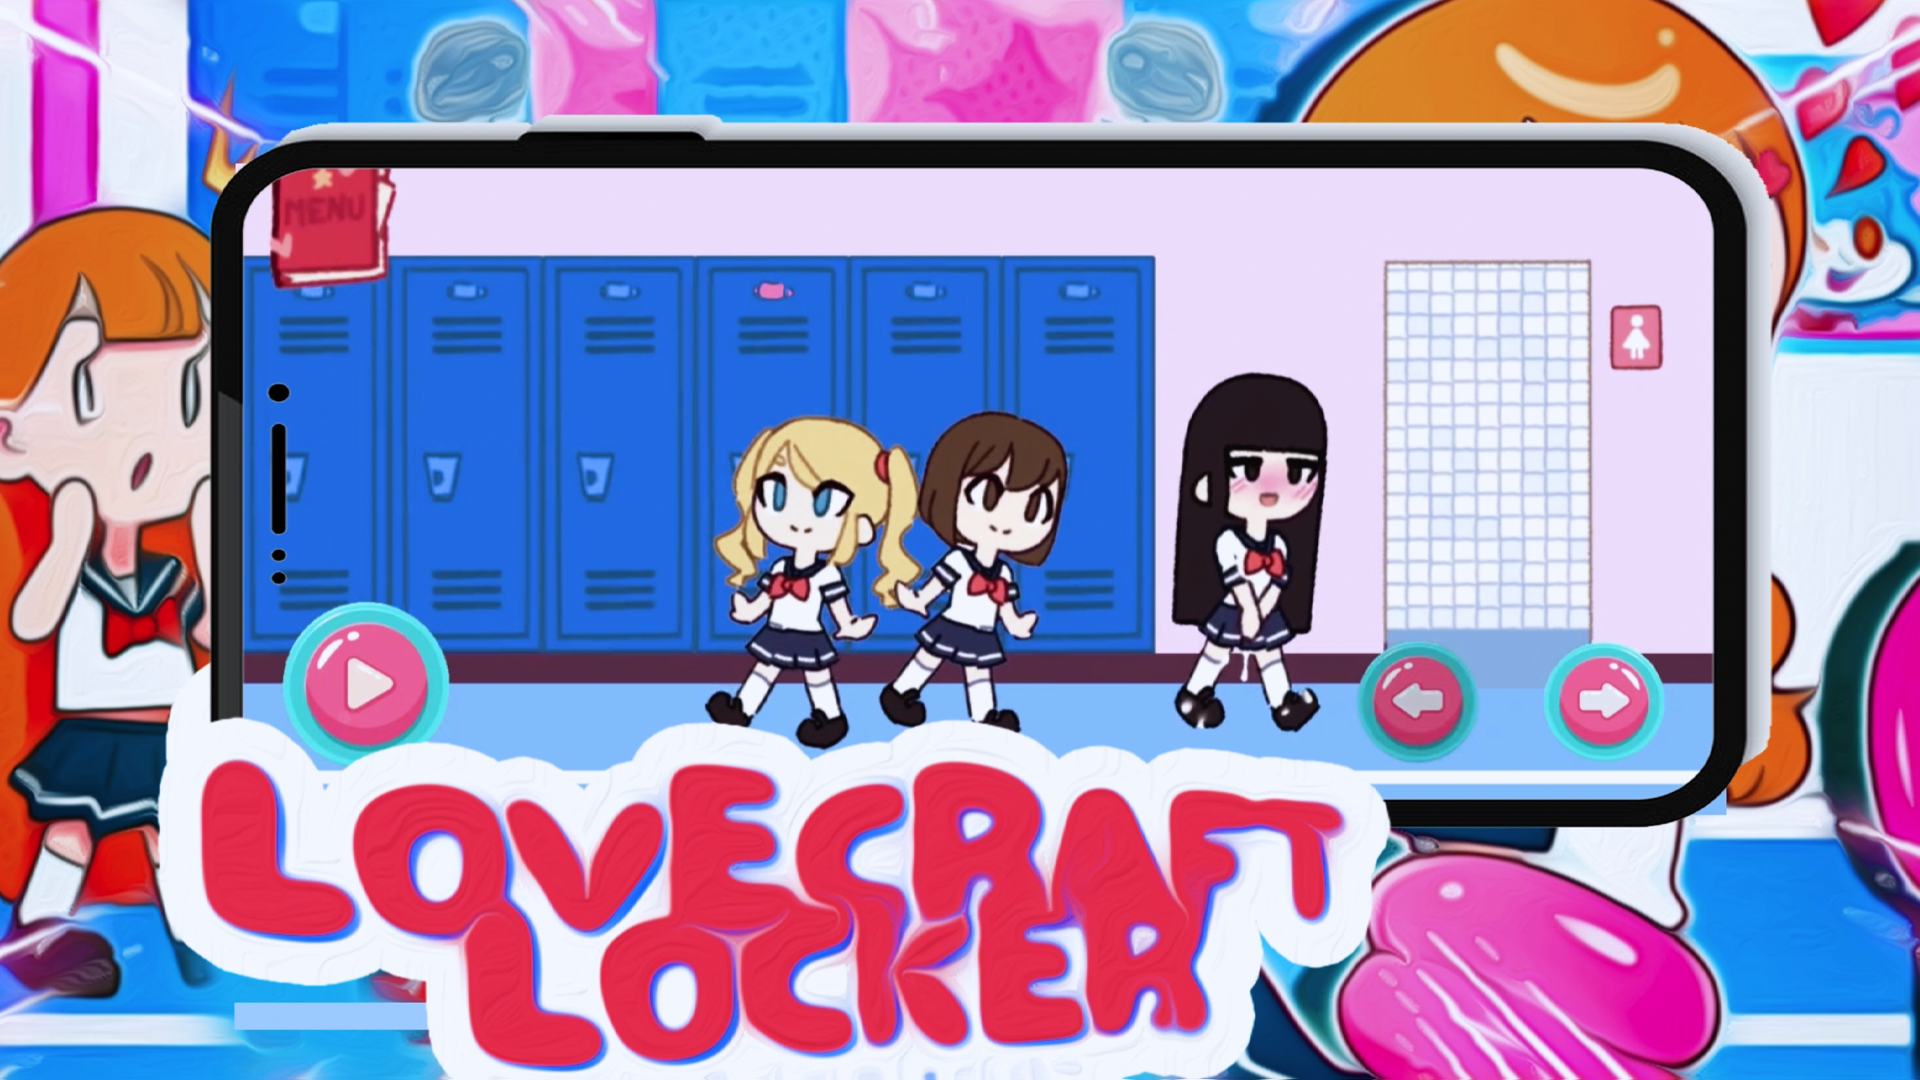 Screenshot 1 of Игра LoveCraft Locker 